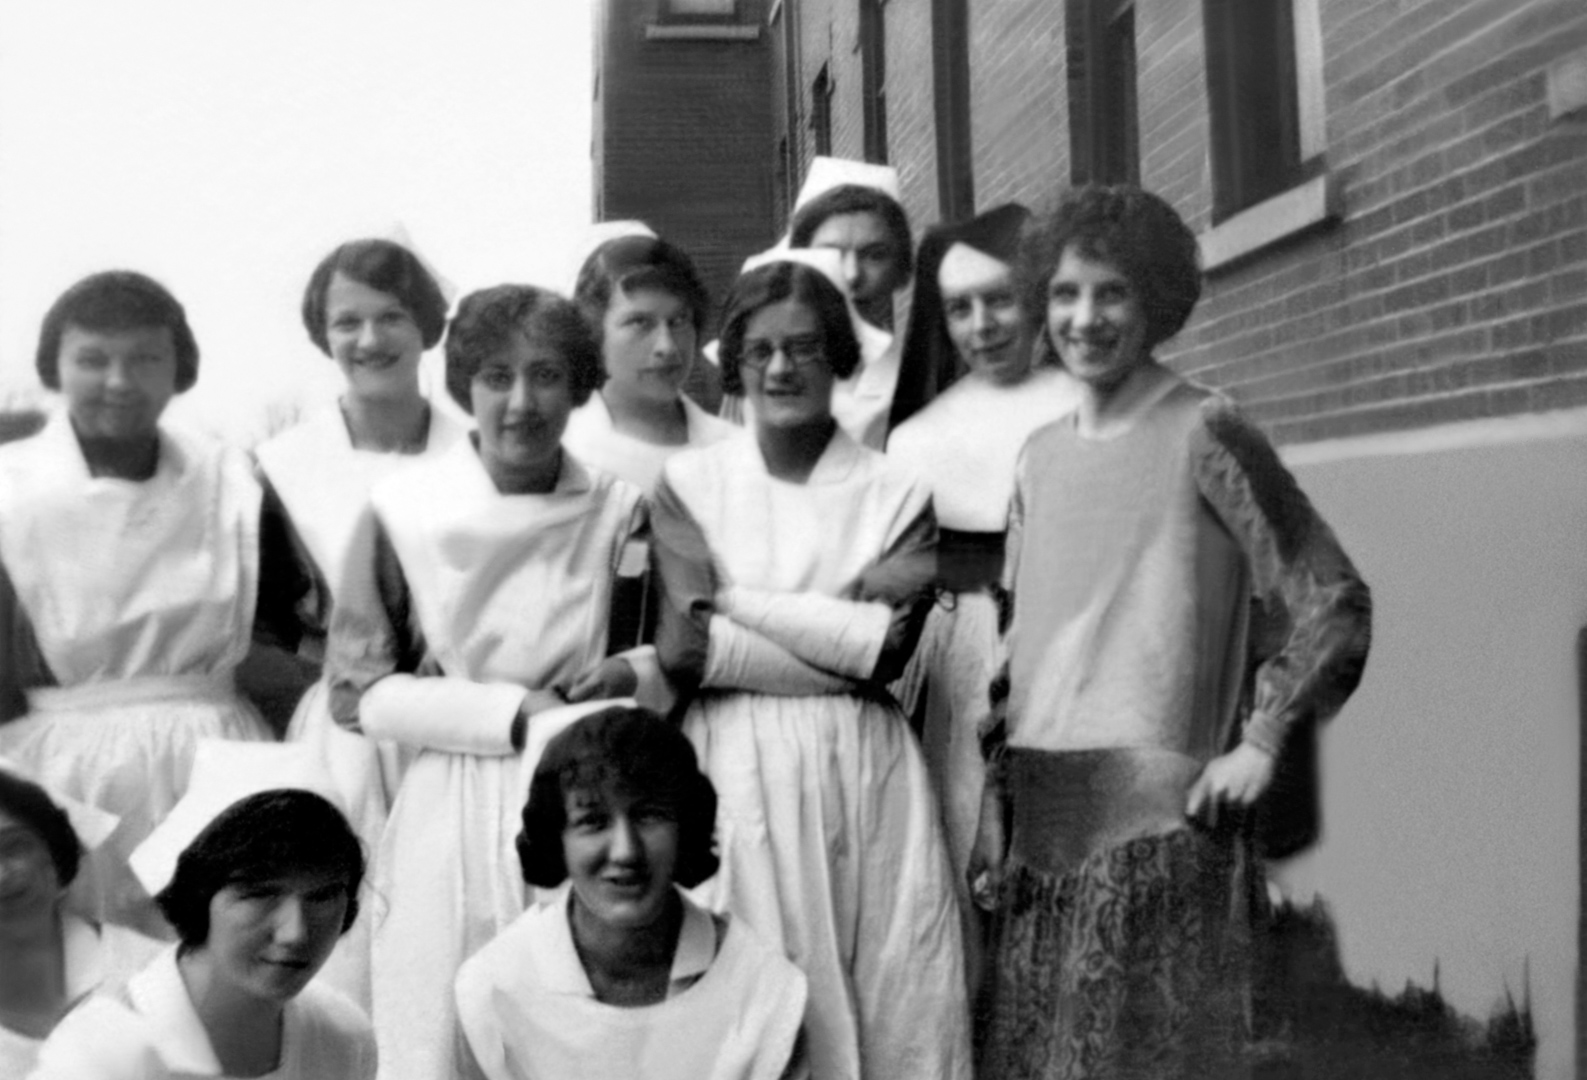 Rosaline Fitzgerald (Center), St Vincent's Nursing School (probably late 1920s) [photo restured]